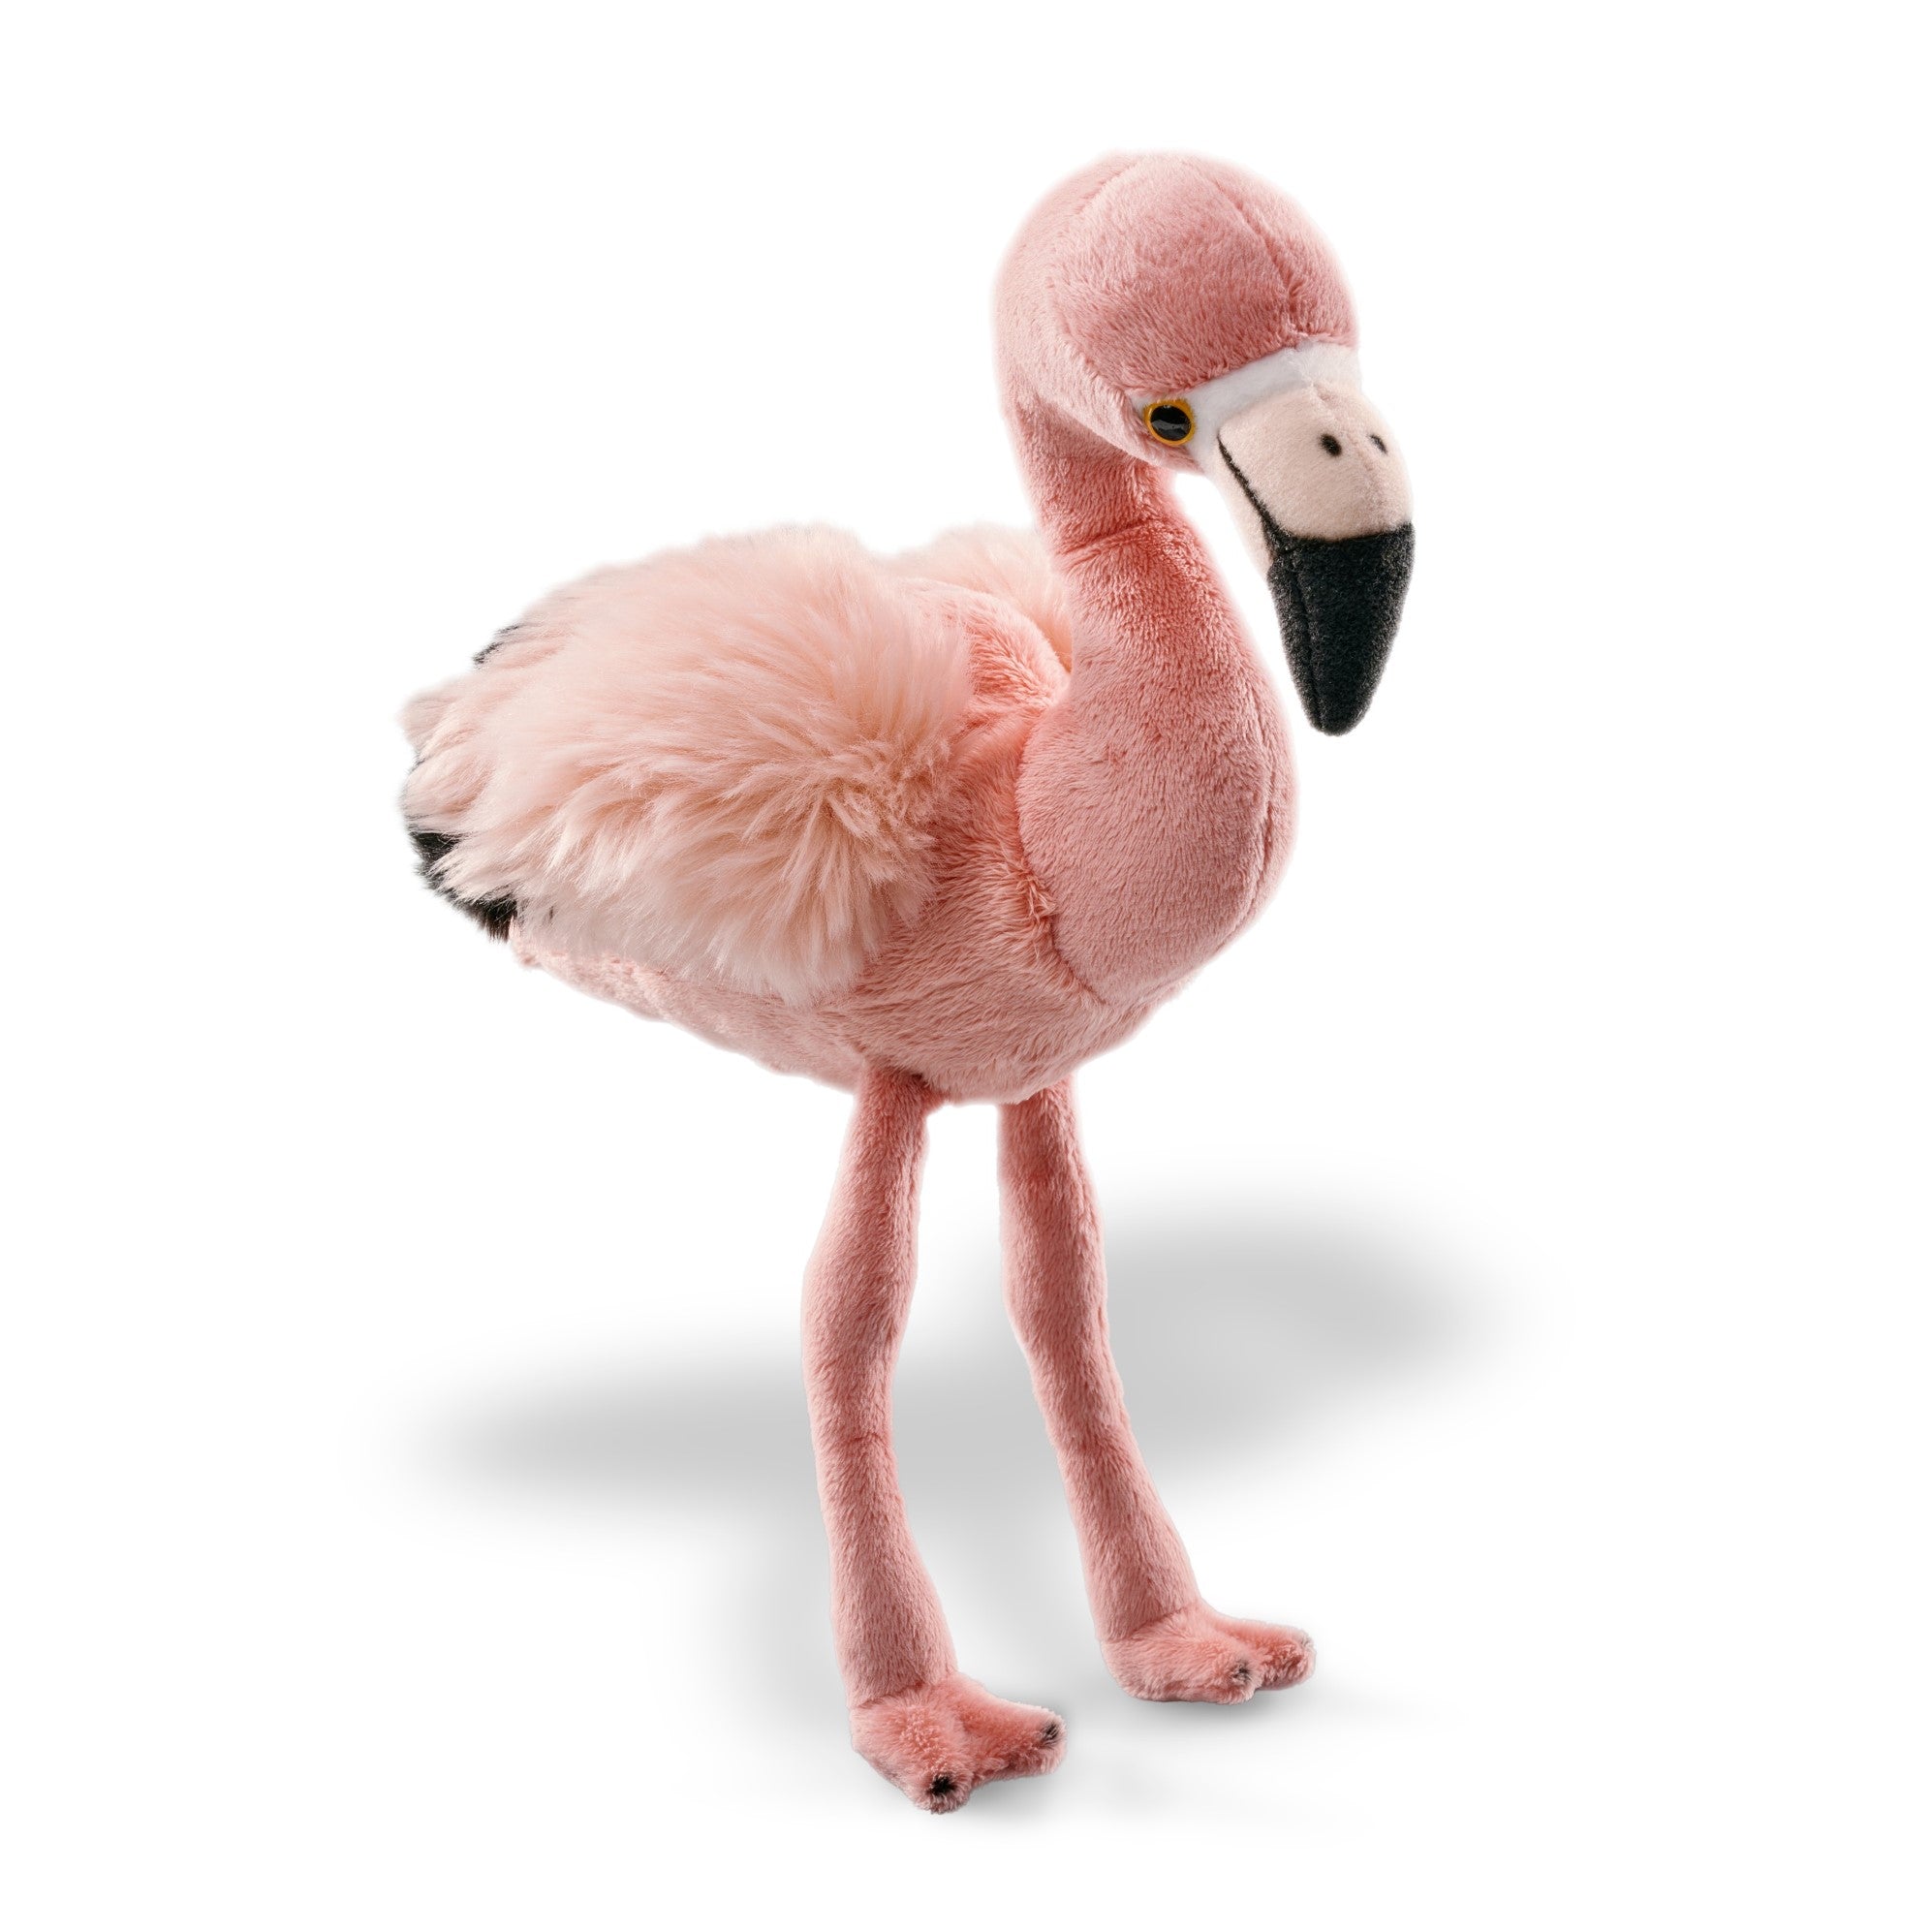 Flamingo - WWF-Canada